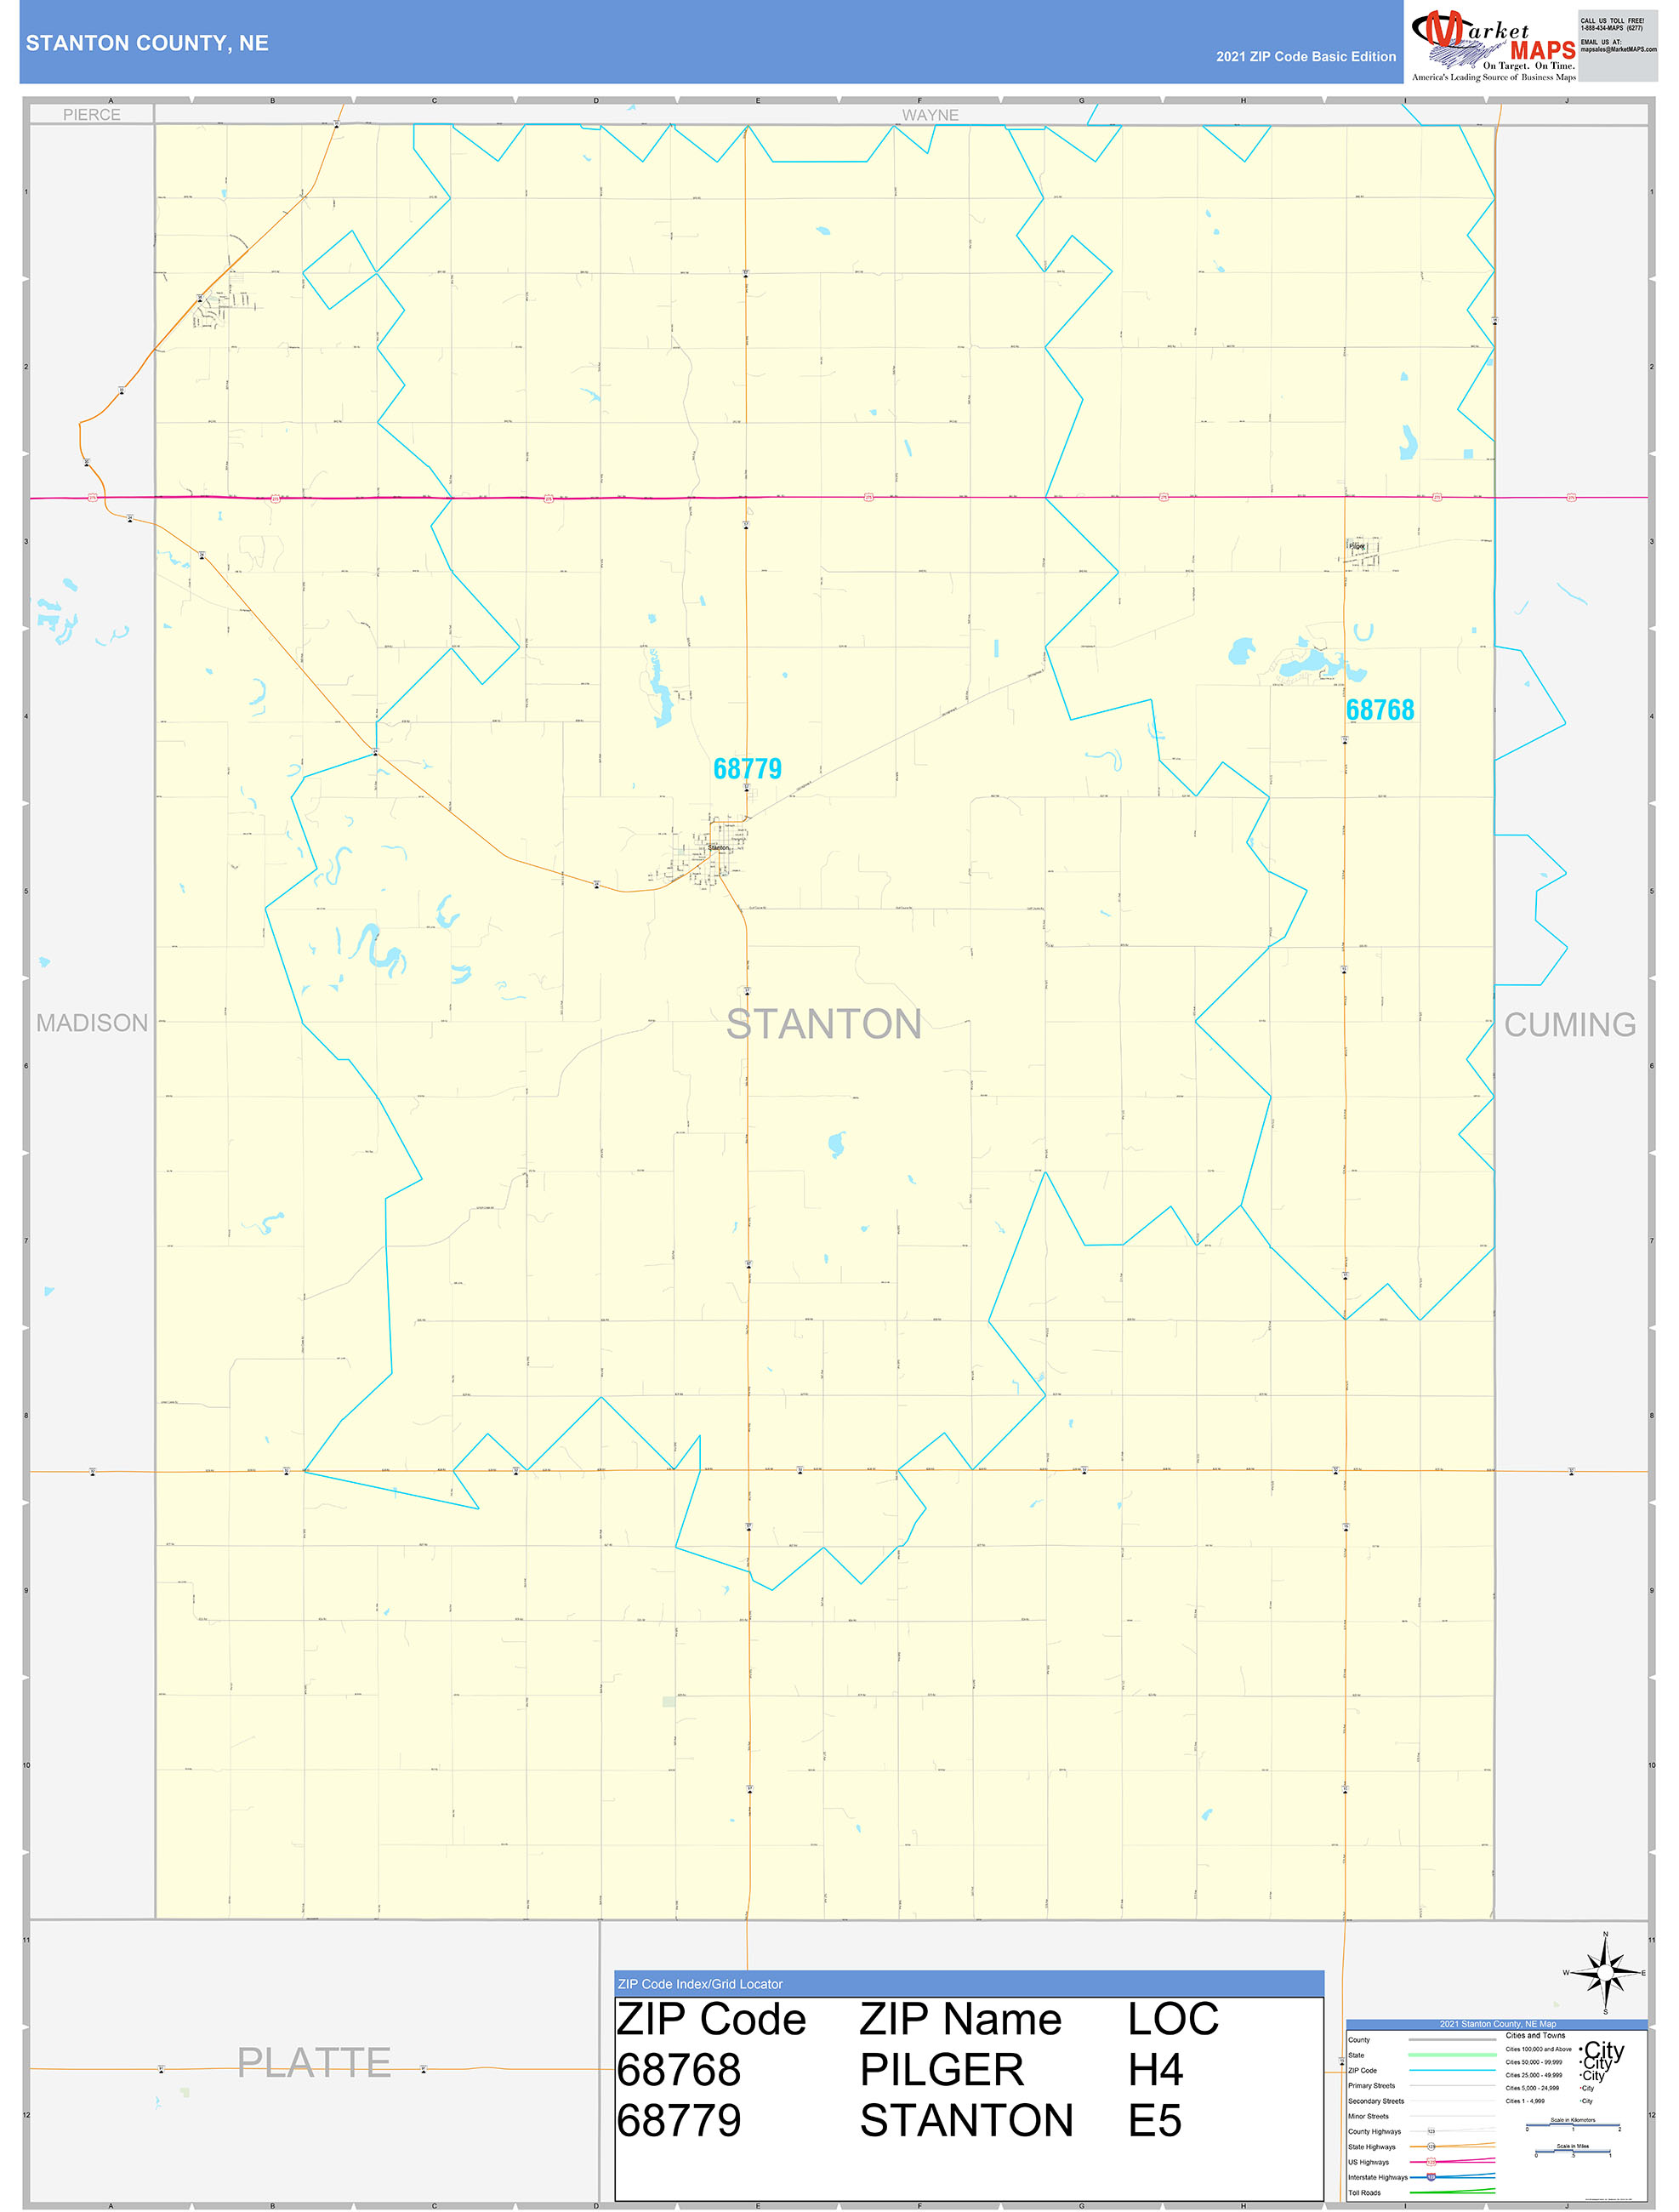 Stanton County, NE Zip Code Wall Map Basic Style by MarketMAPS